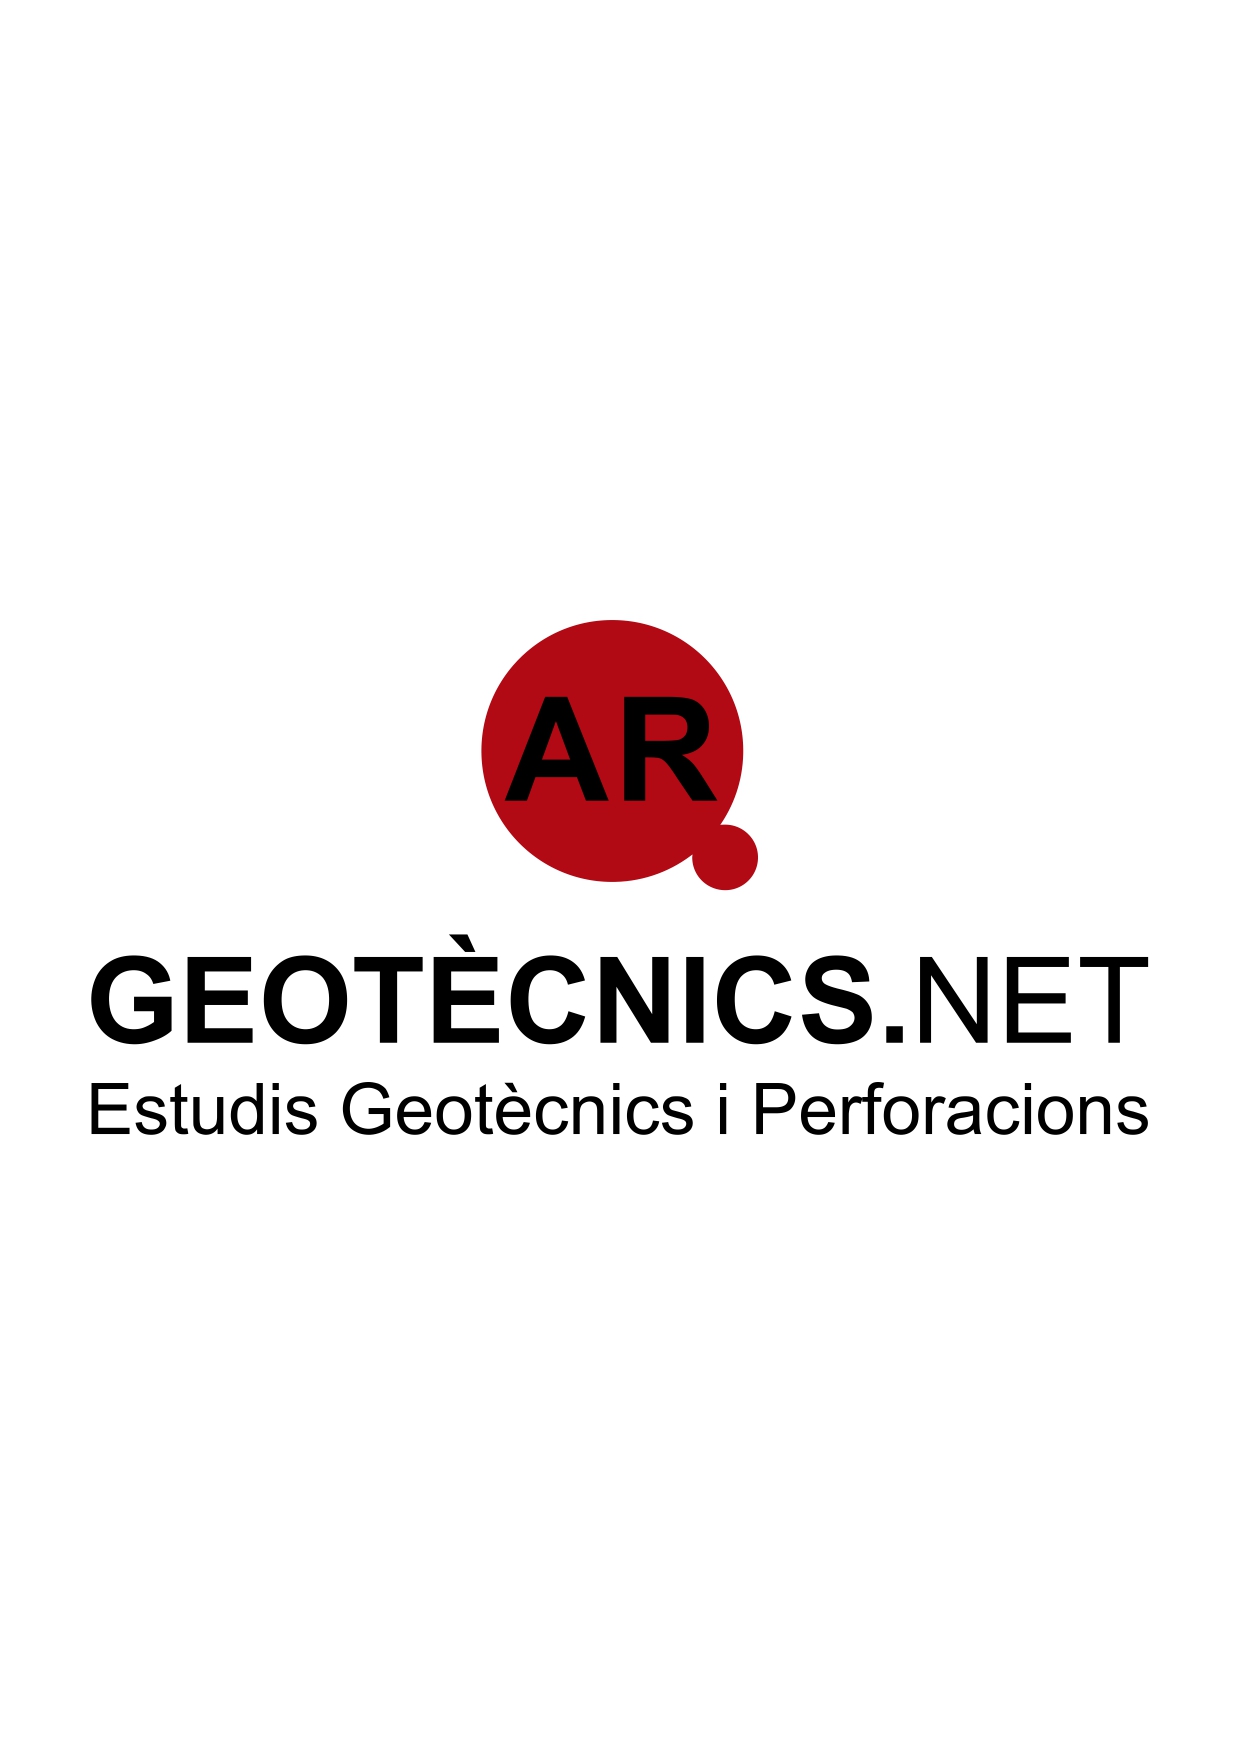 AR Geotecnics